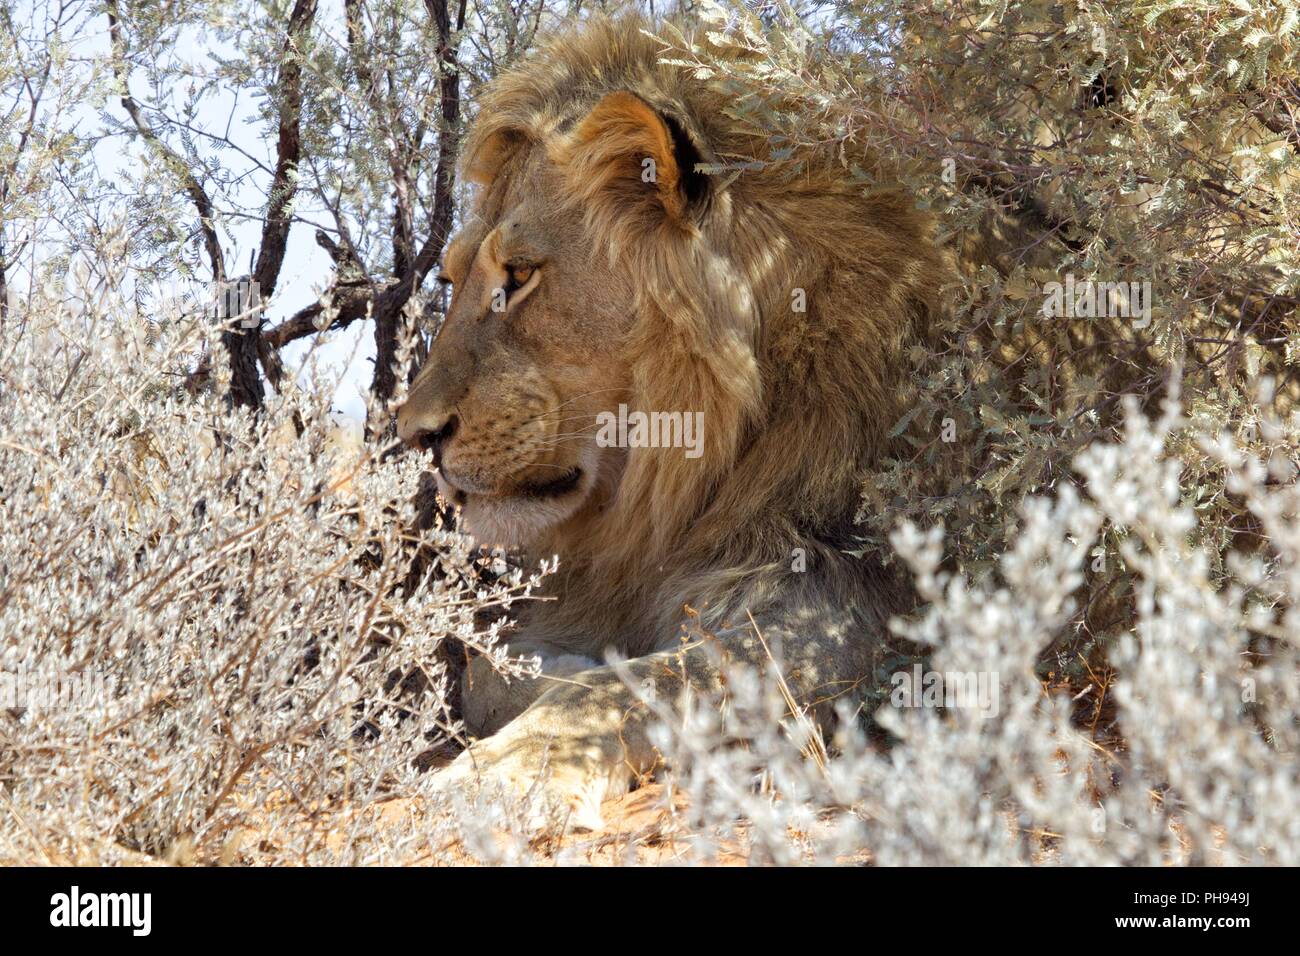 a lion in the bush at kgalagadi national park Stock Photo